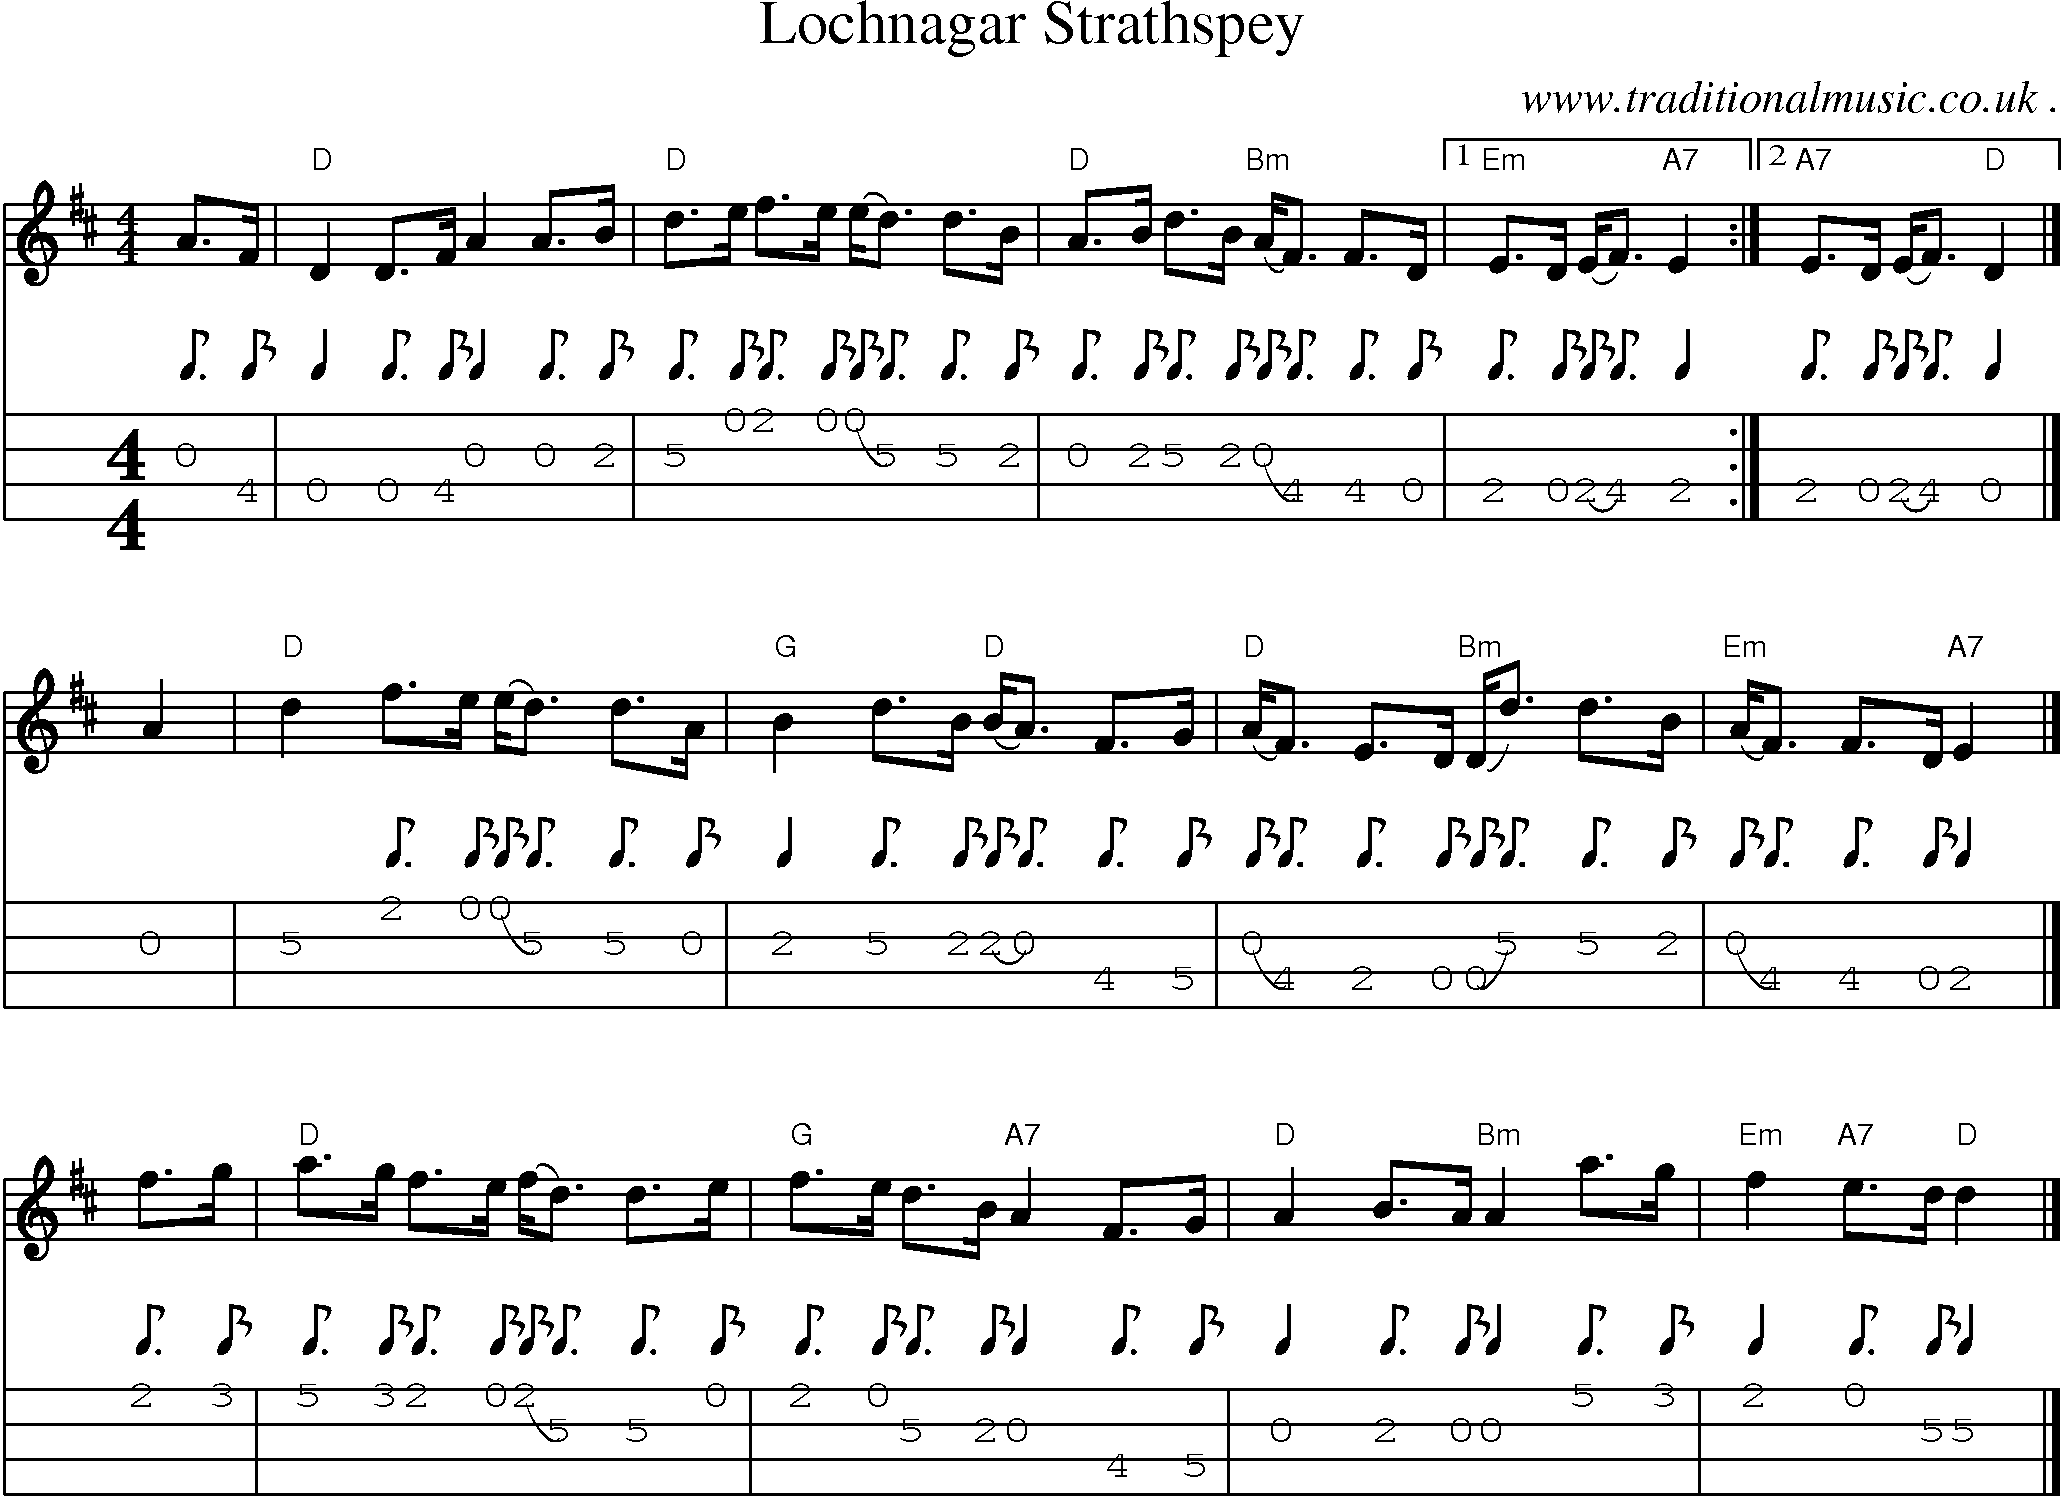 Sheet-music  score, Chords and Mandolin Tabs for Lochnagar Strathspey